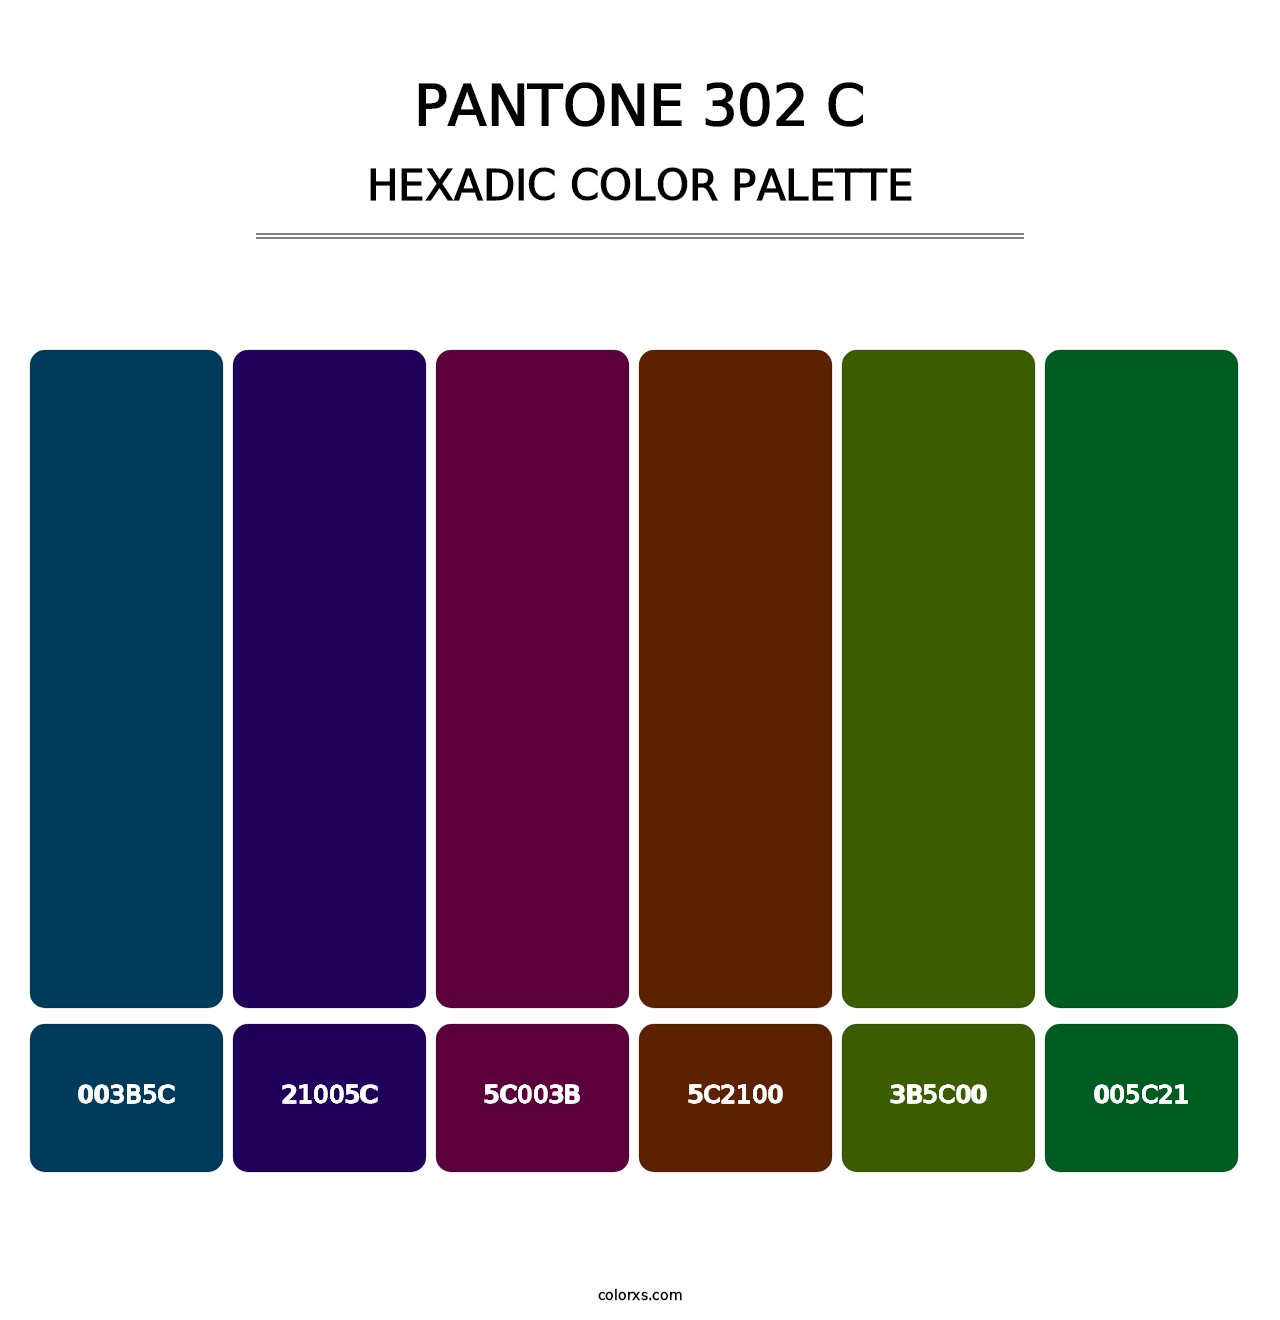 PANTONE 302 C - Hexadic Color Palette